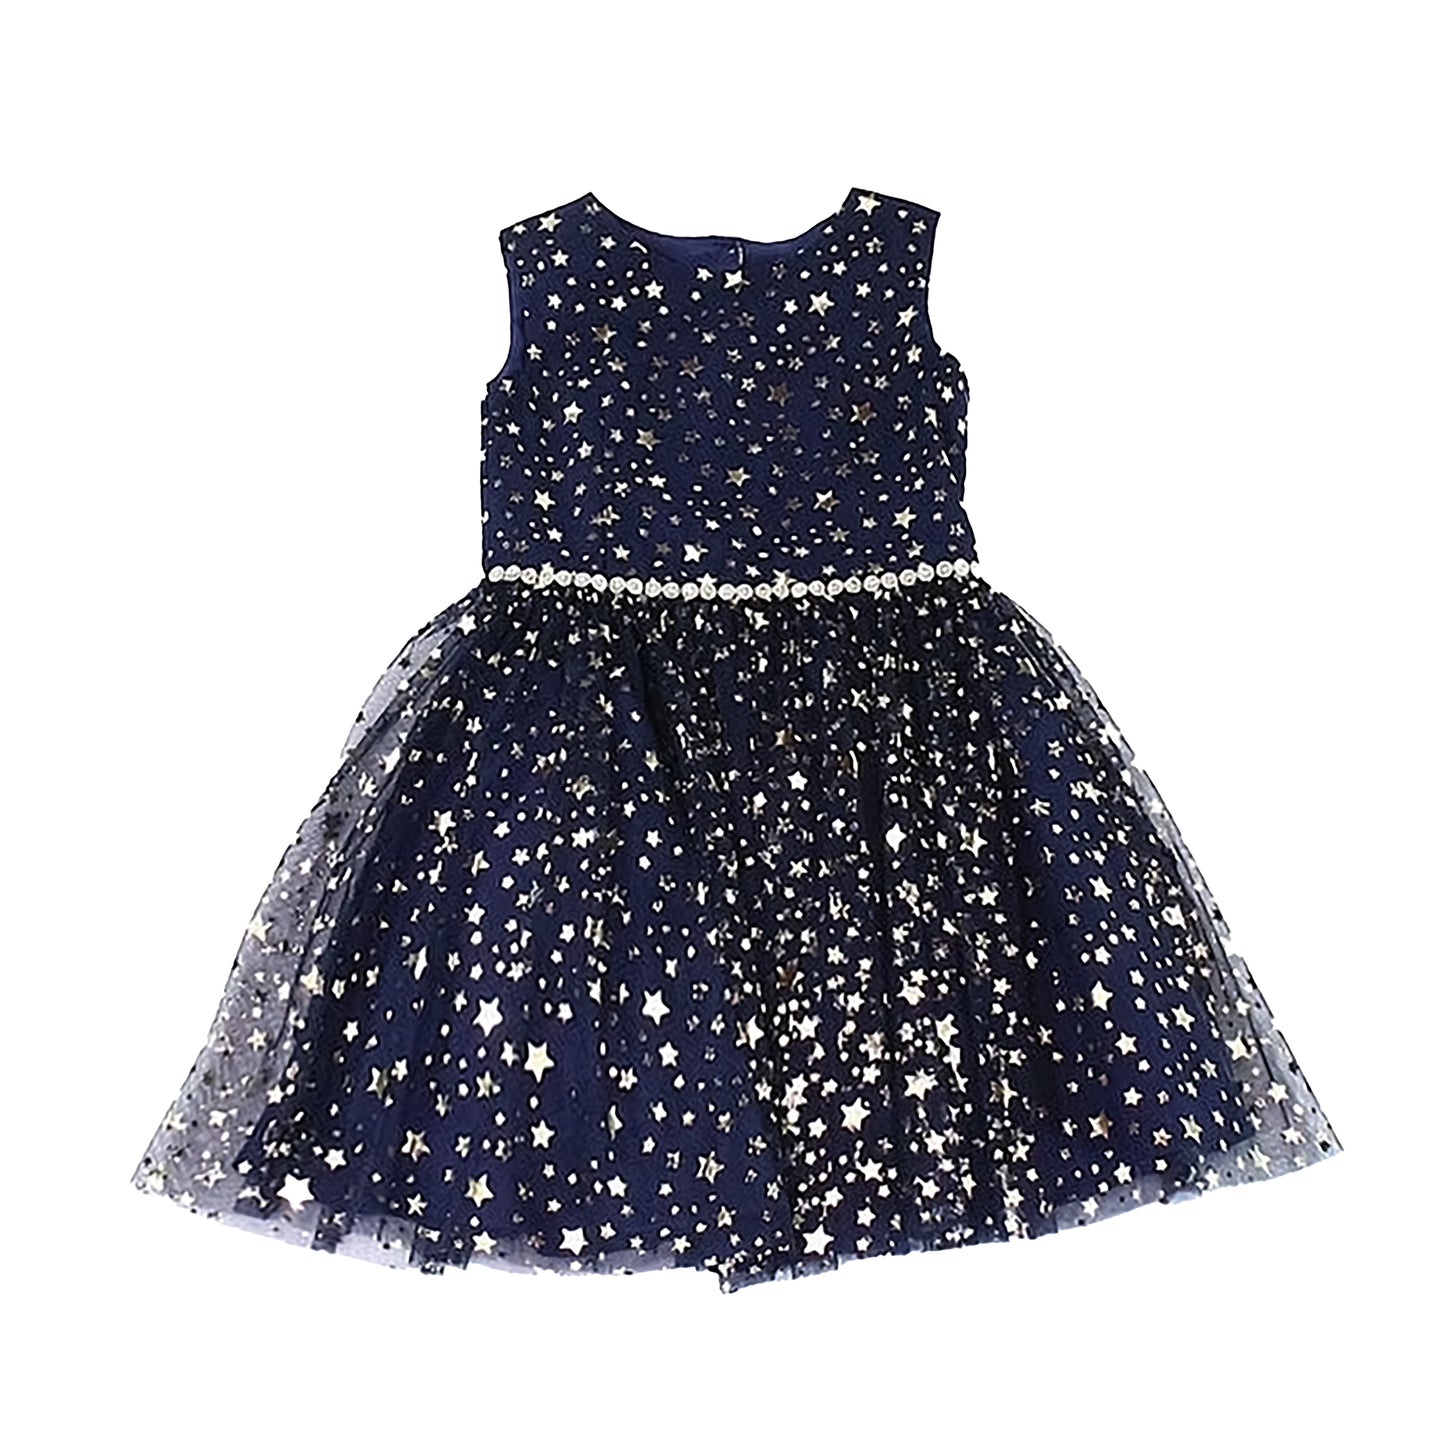 [18m] Pastourelle by Pippa & Julie Blue Girls Size 5 Star-Print Mesh Dress